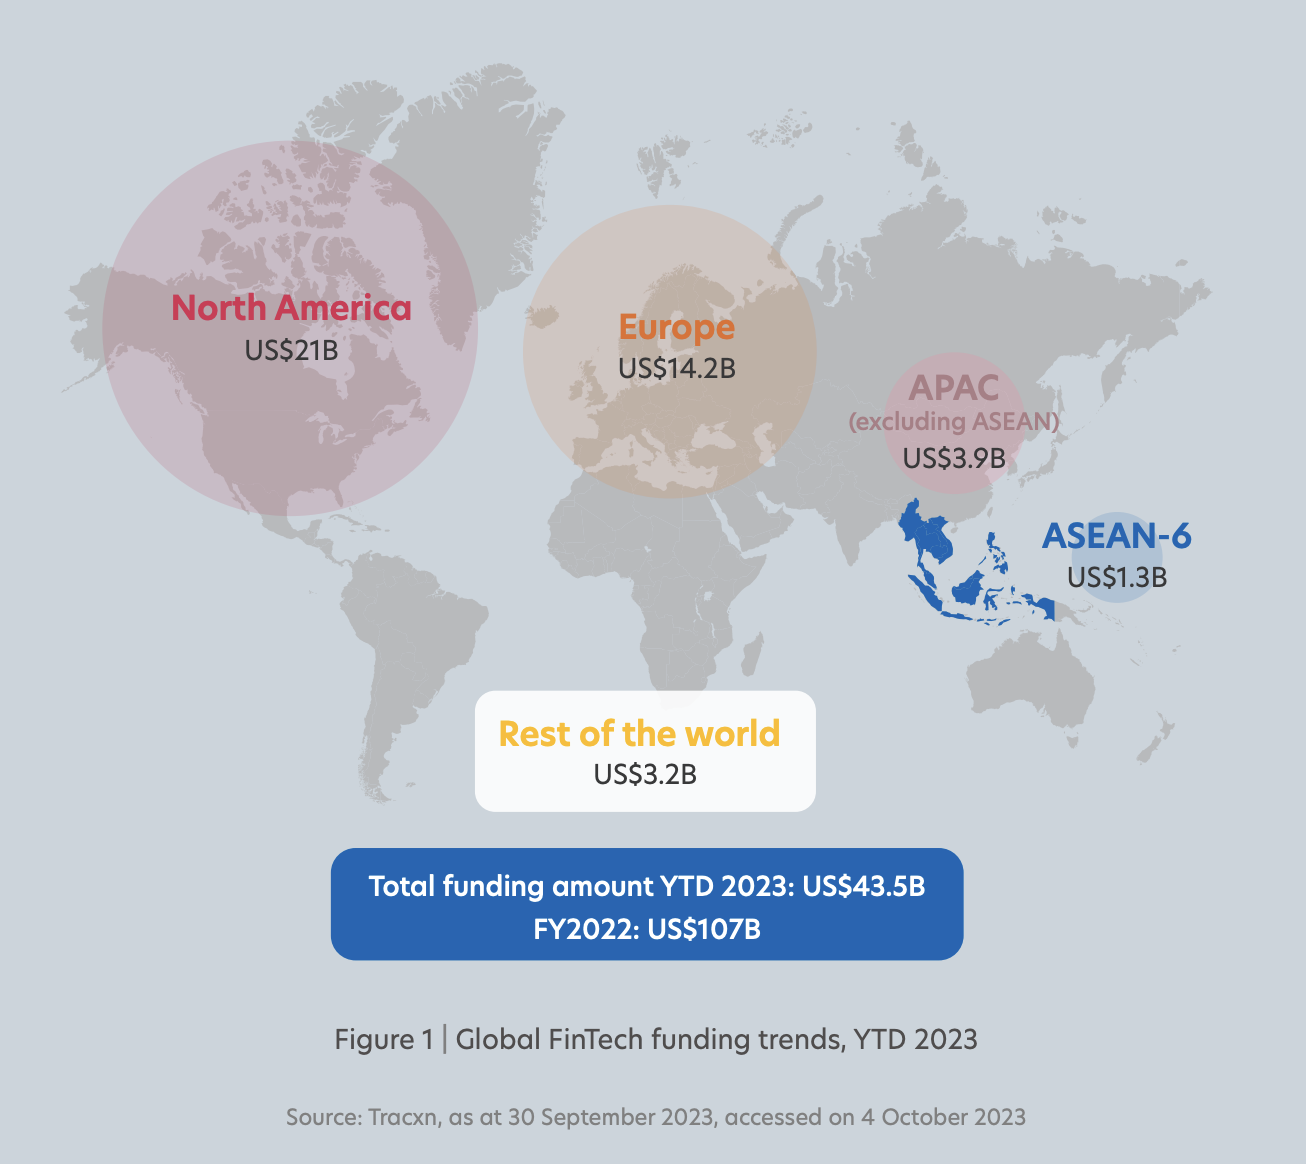 Global Finrech Funding Trends, YTD 2023, ที่มา: Fintech in ASEAN 2023: Seeding the Green Transition, UOB, PwC Singapore และ the Singapore Fintech Association (SFA), พ.ย. 2023